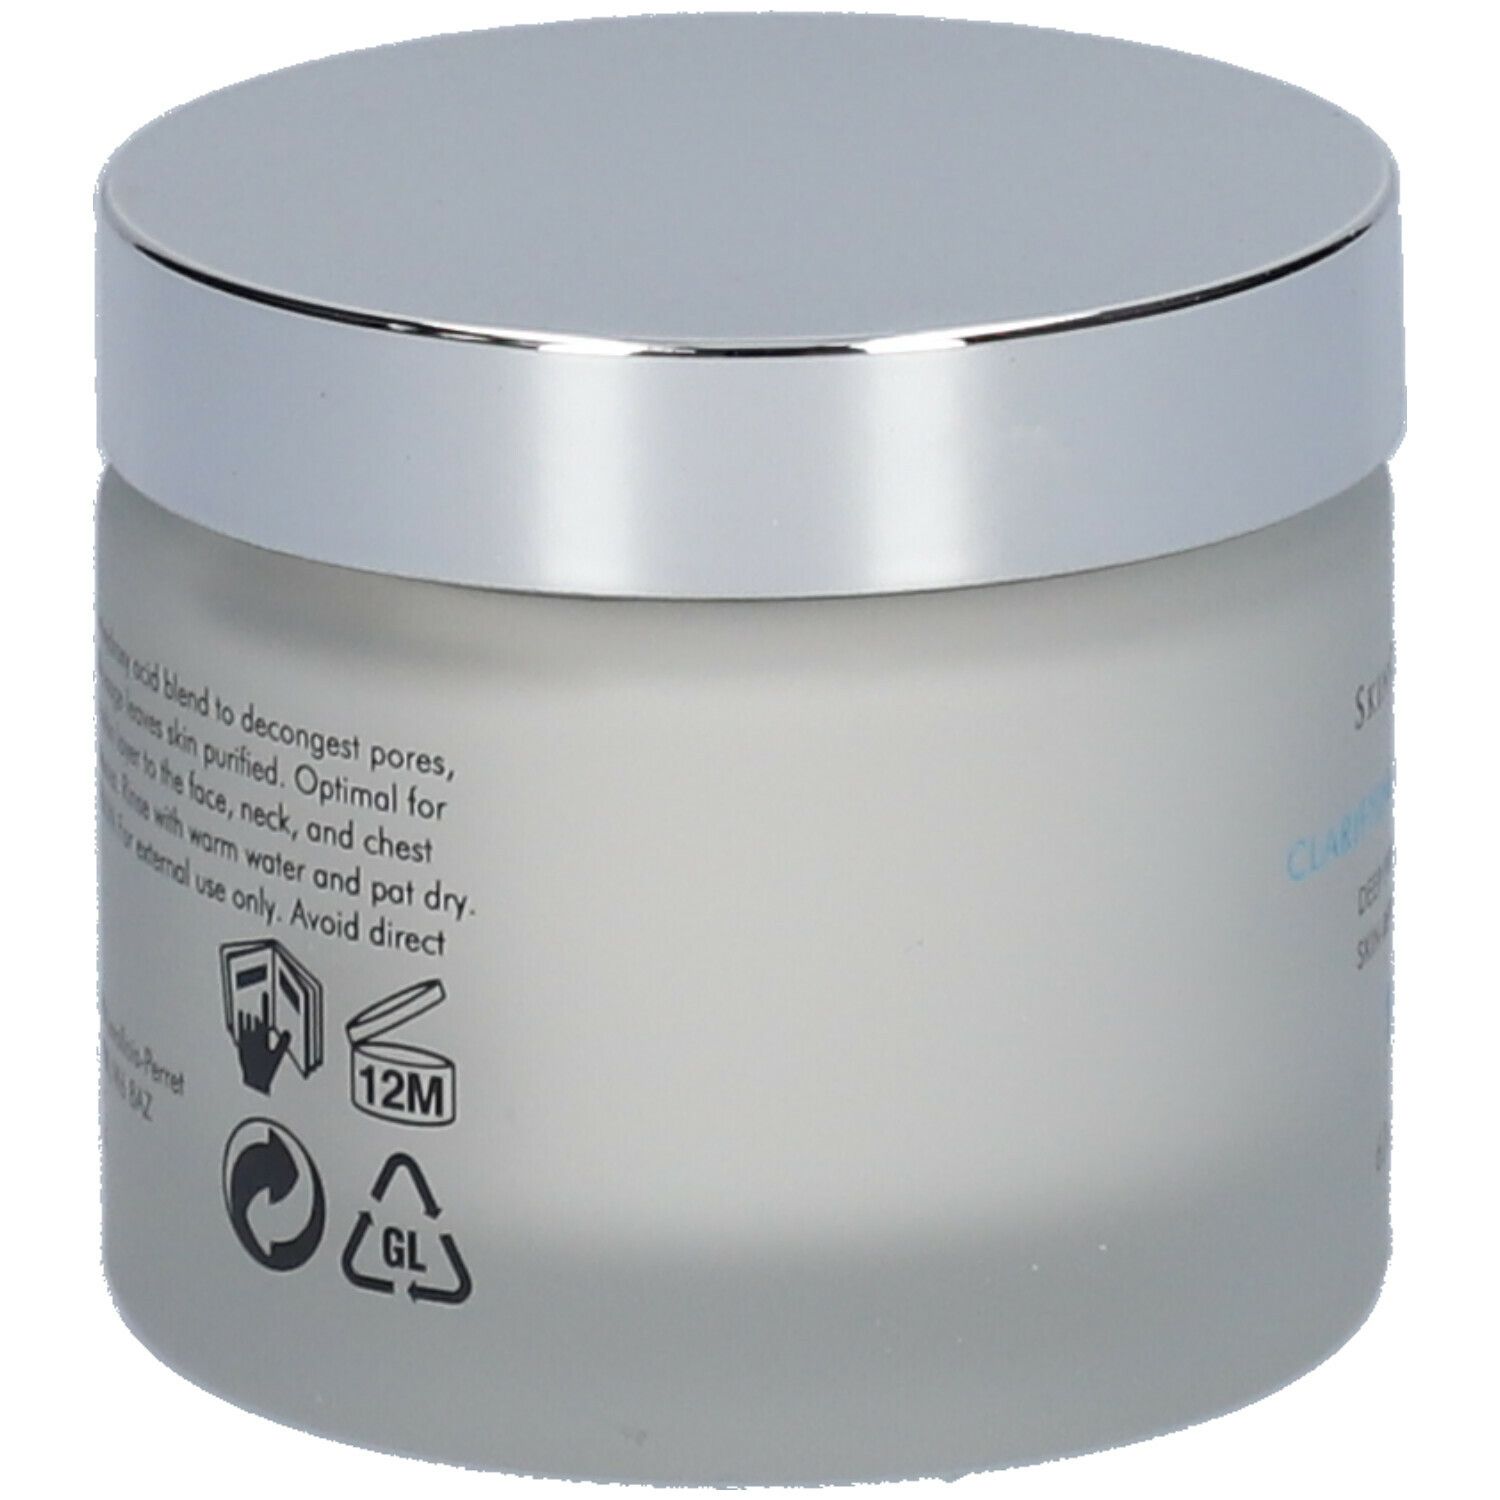 SkinCeuticals Clarifying Clay Masque Maschera purificante a base di Argille e Alpha-Idrossiacidi 60 ml